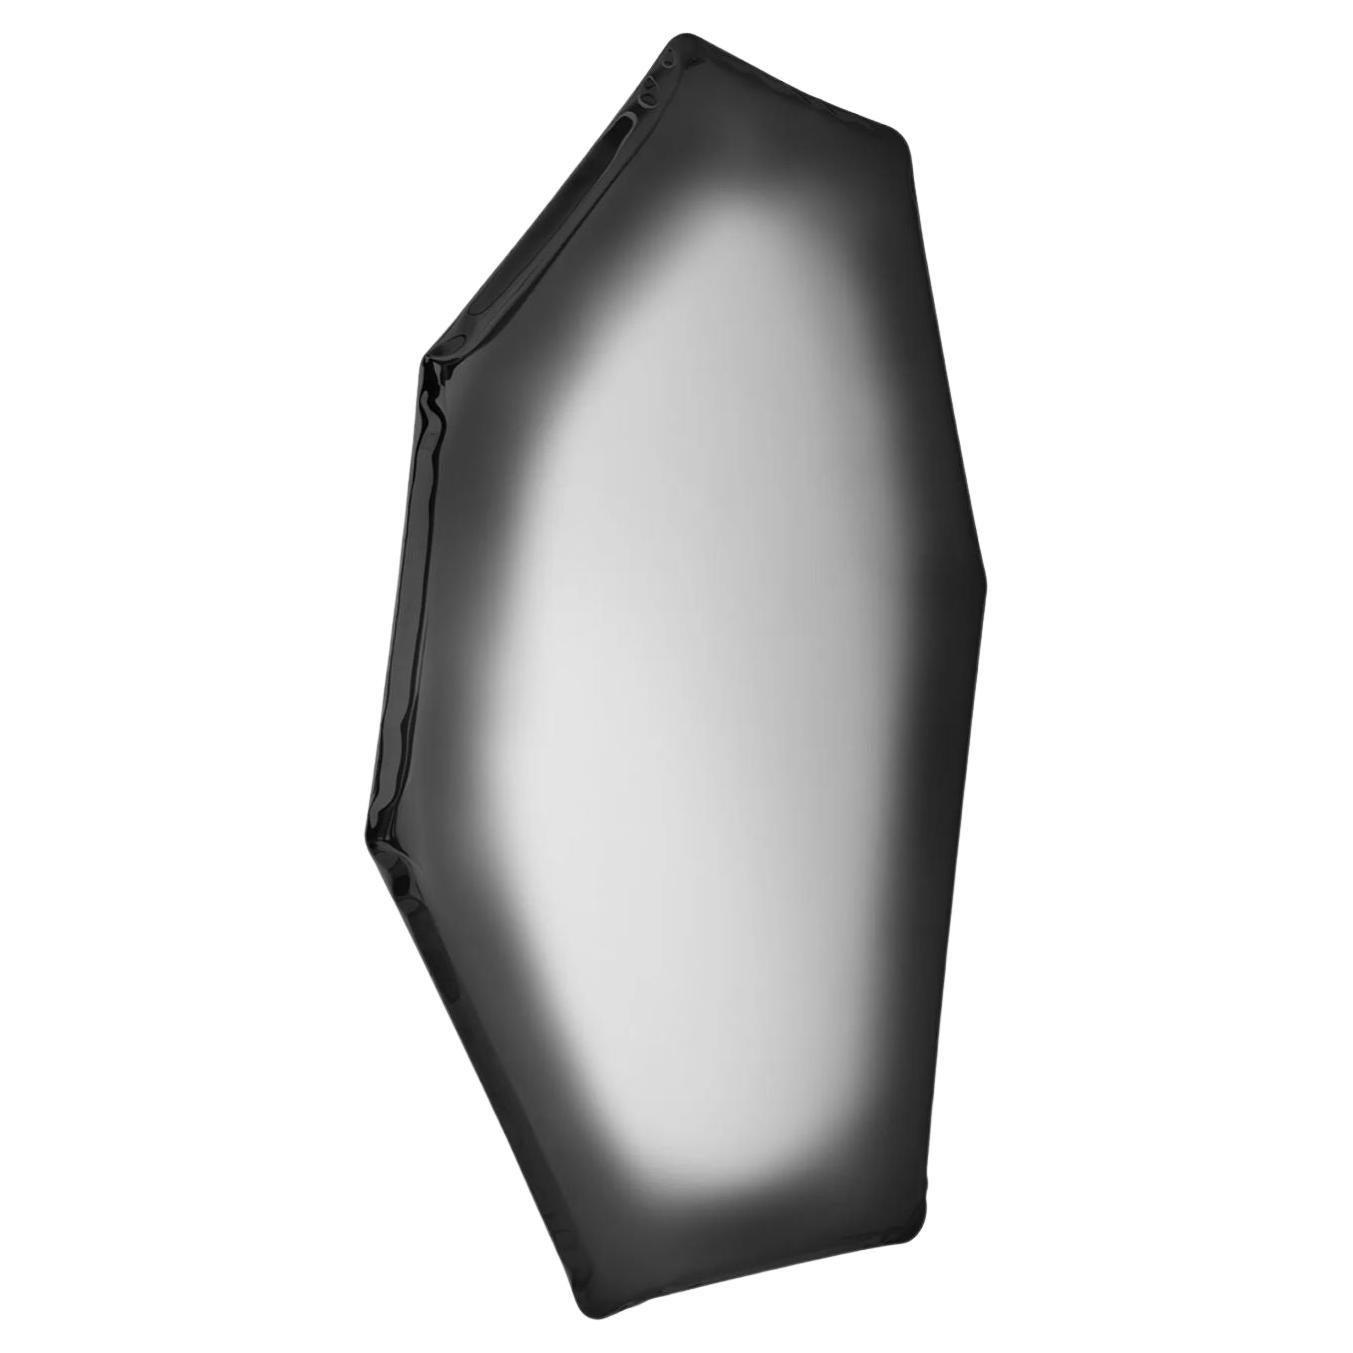 Dark Matter Tafla C2 Sculptural Wall Mirror by Zieta For Sale